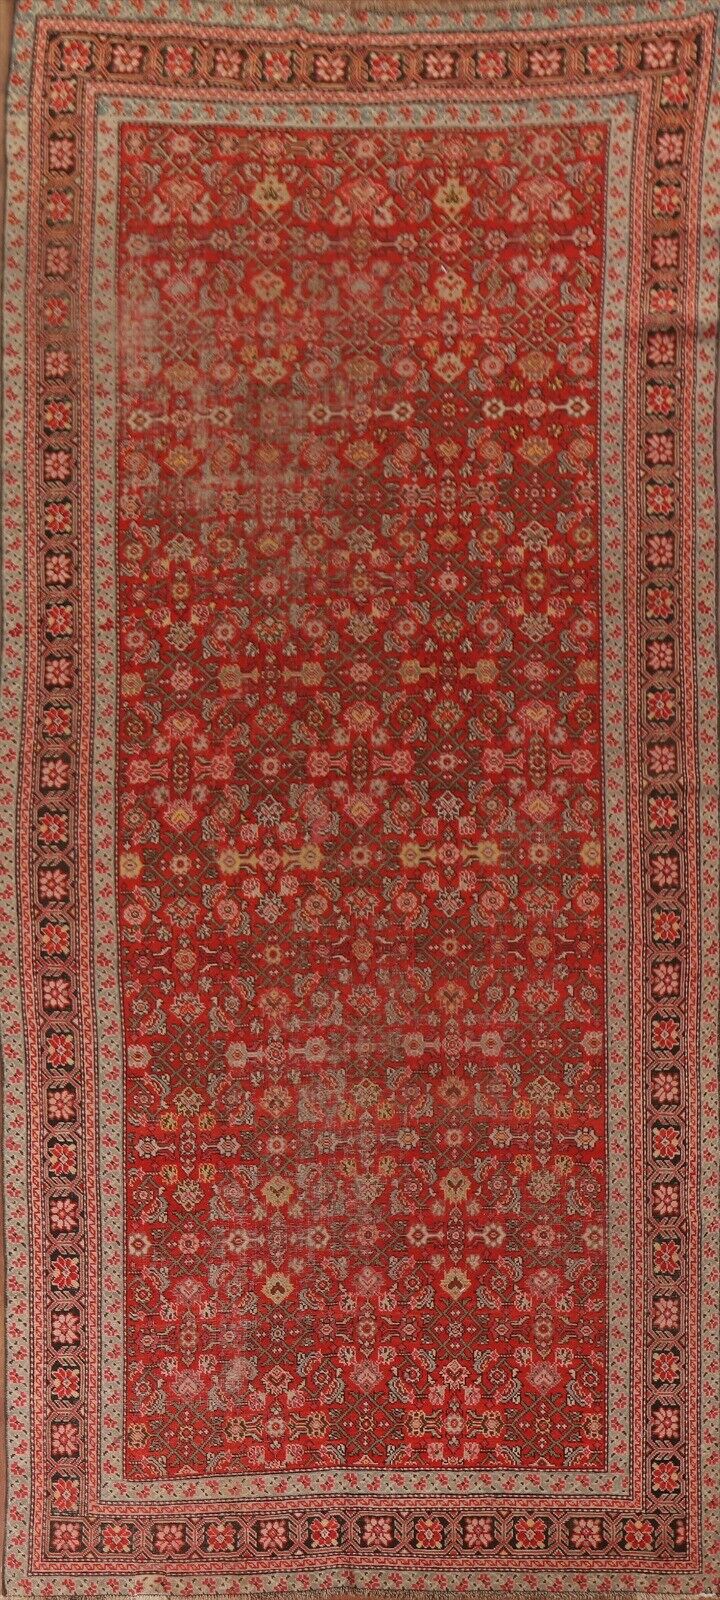 Pre-1900 Antique Russian Karabagh Vegetable Dye Hand-made Runner Rug 5x12 Carpet